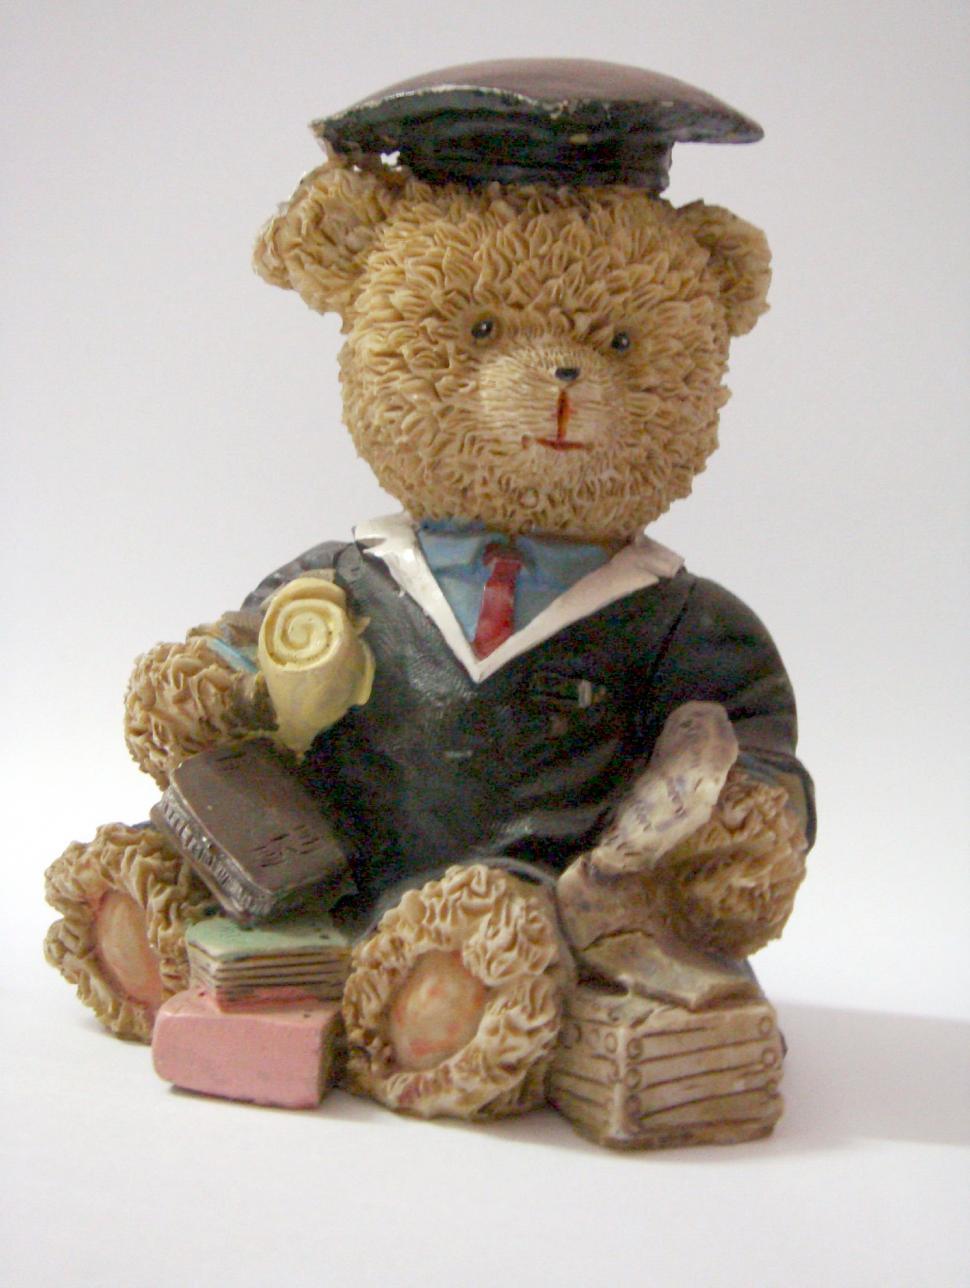 Free Image of Teddy bear 